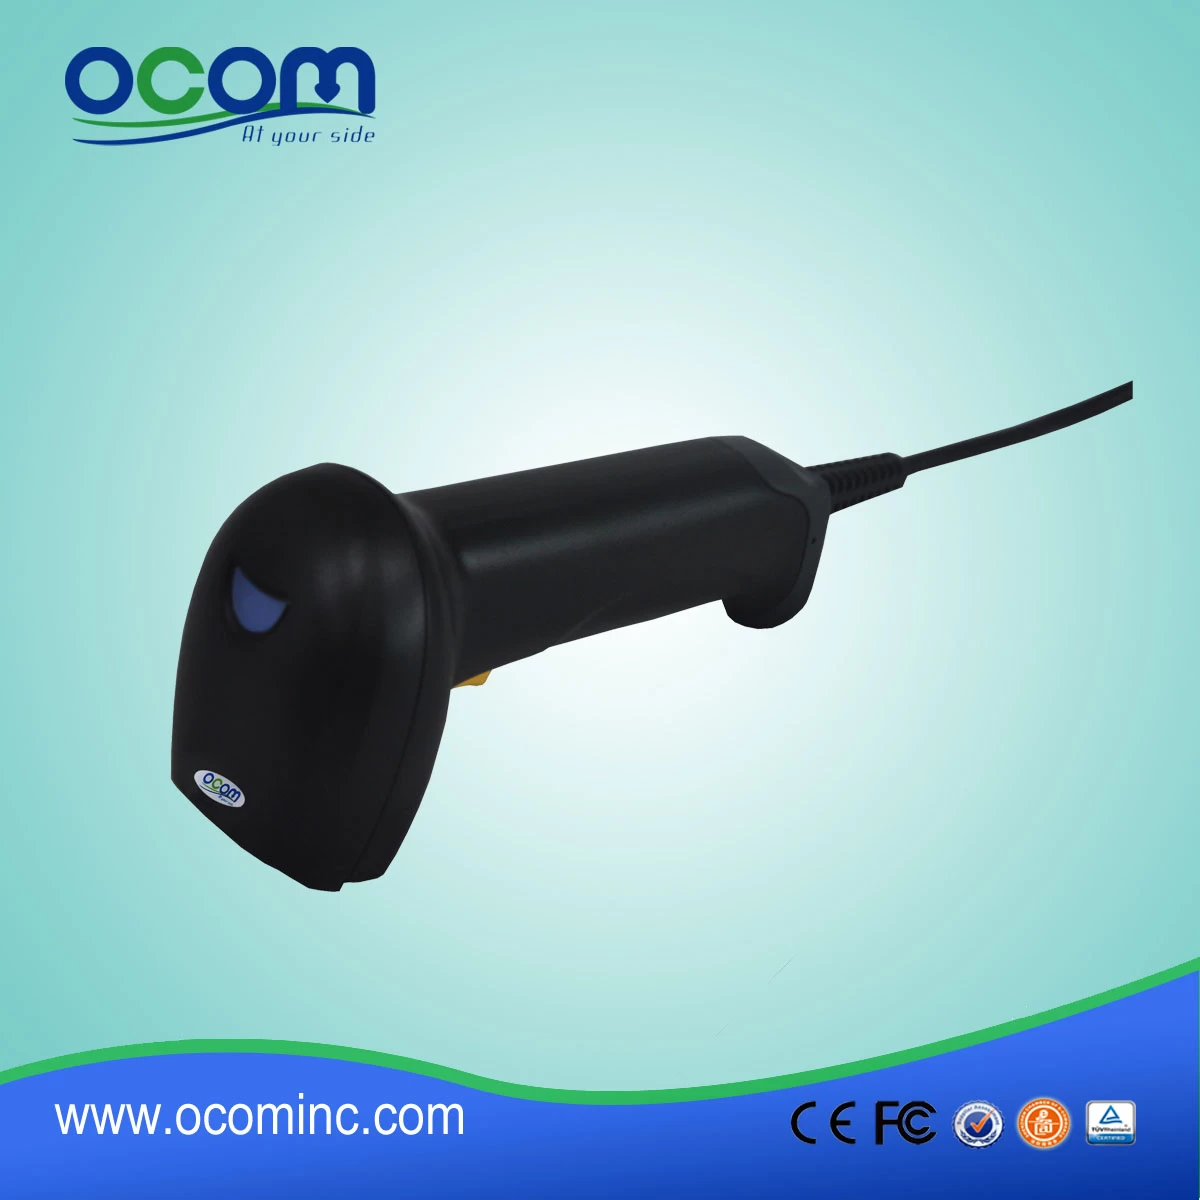 OCBS-L006 USB Handheld Laser Barcode Scanner